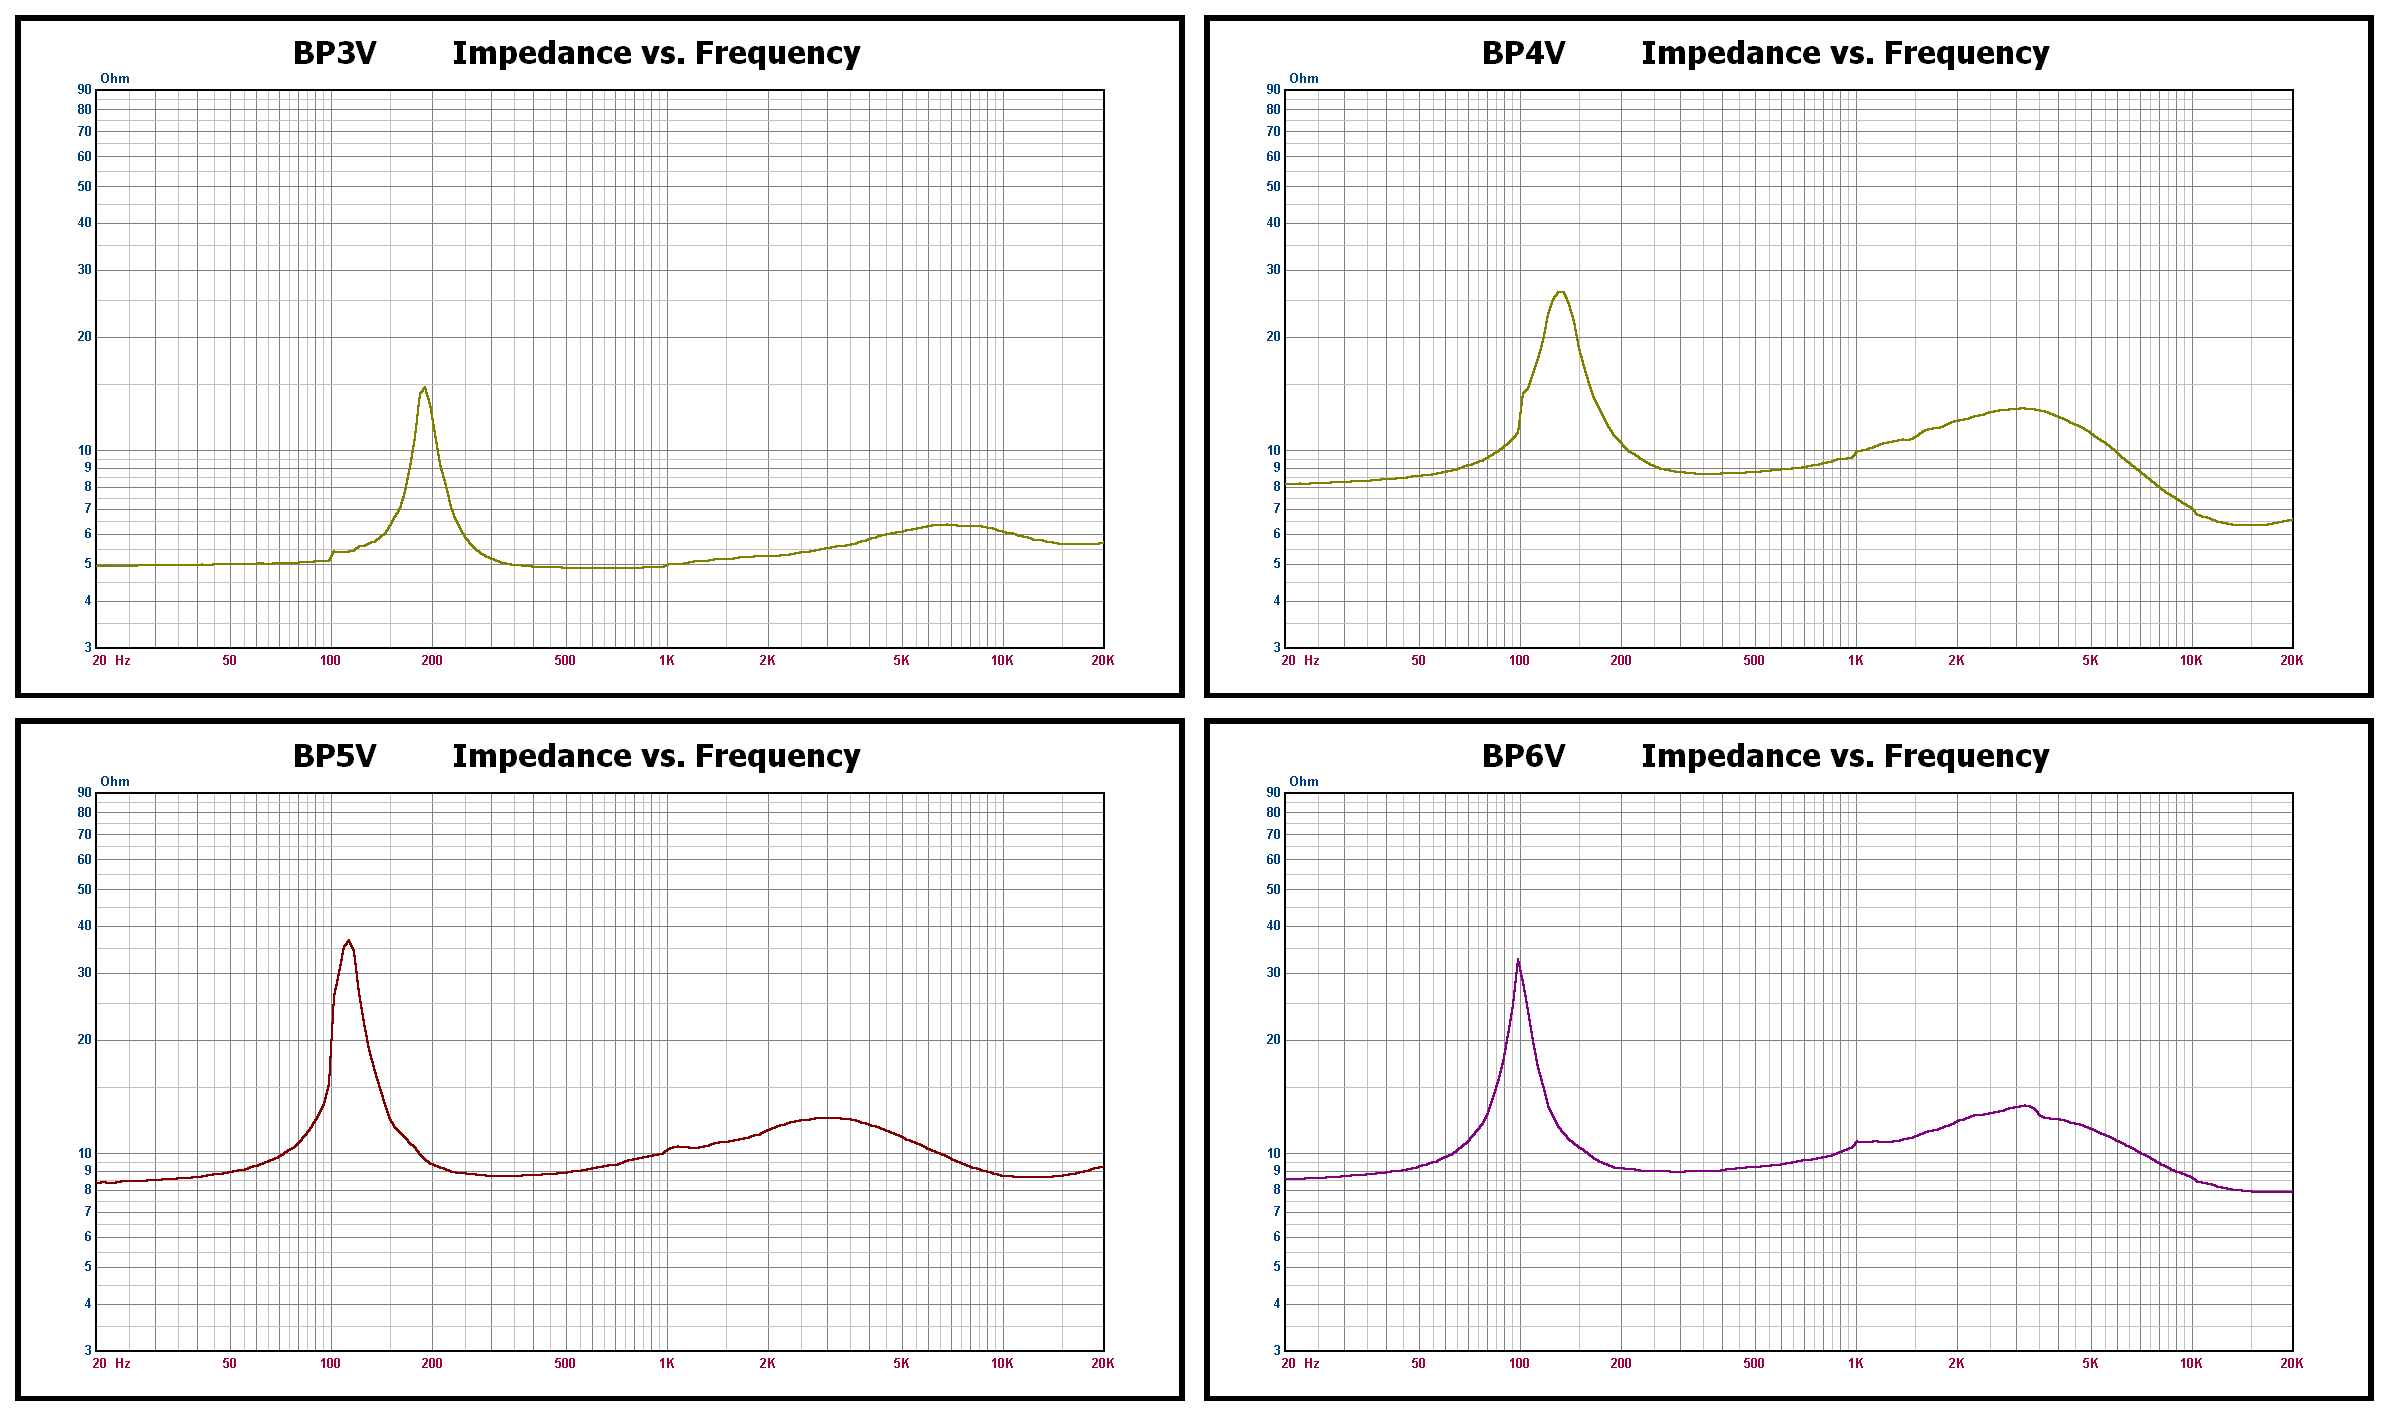 BPV Impedance graphs